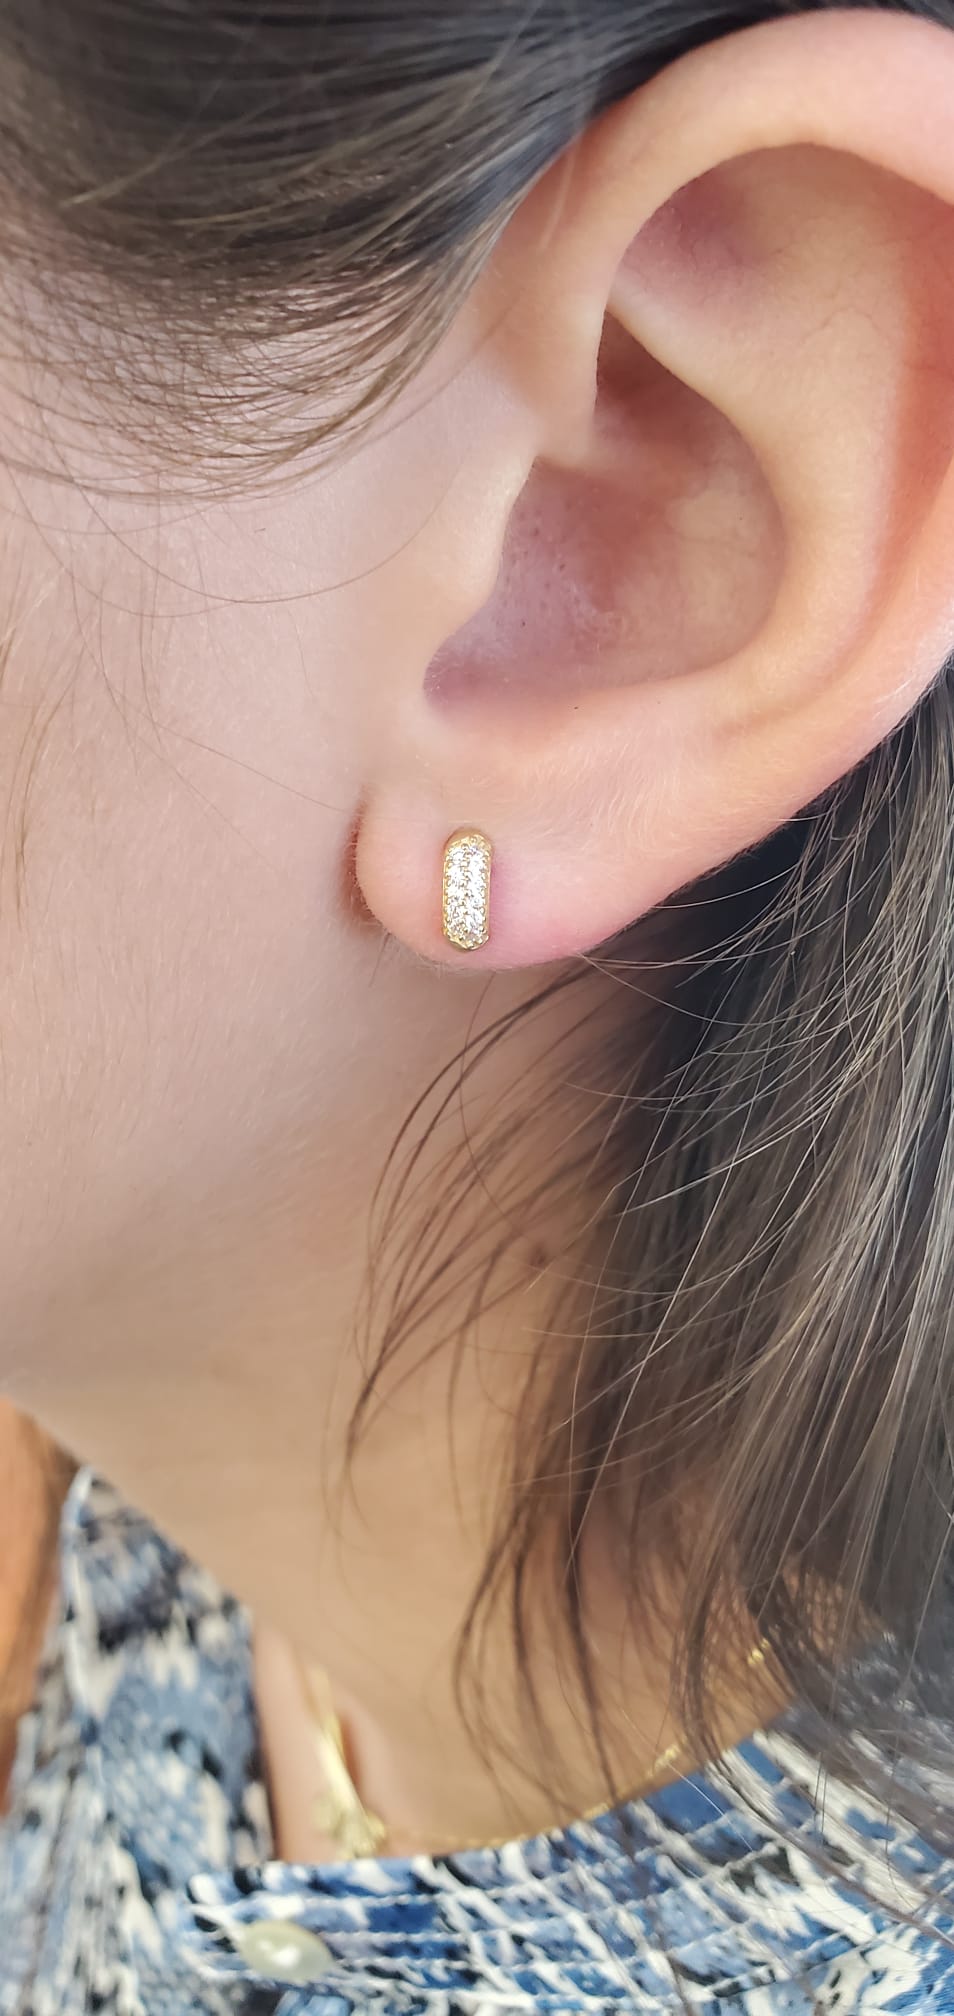 14k Gold Miniature CZ Curved Bar Earring